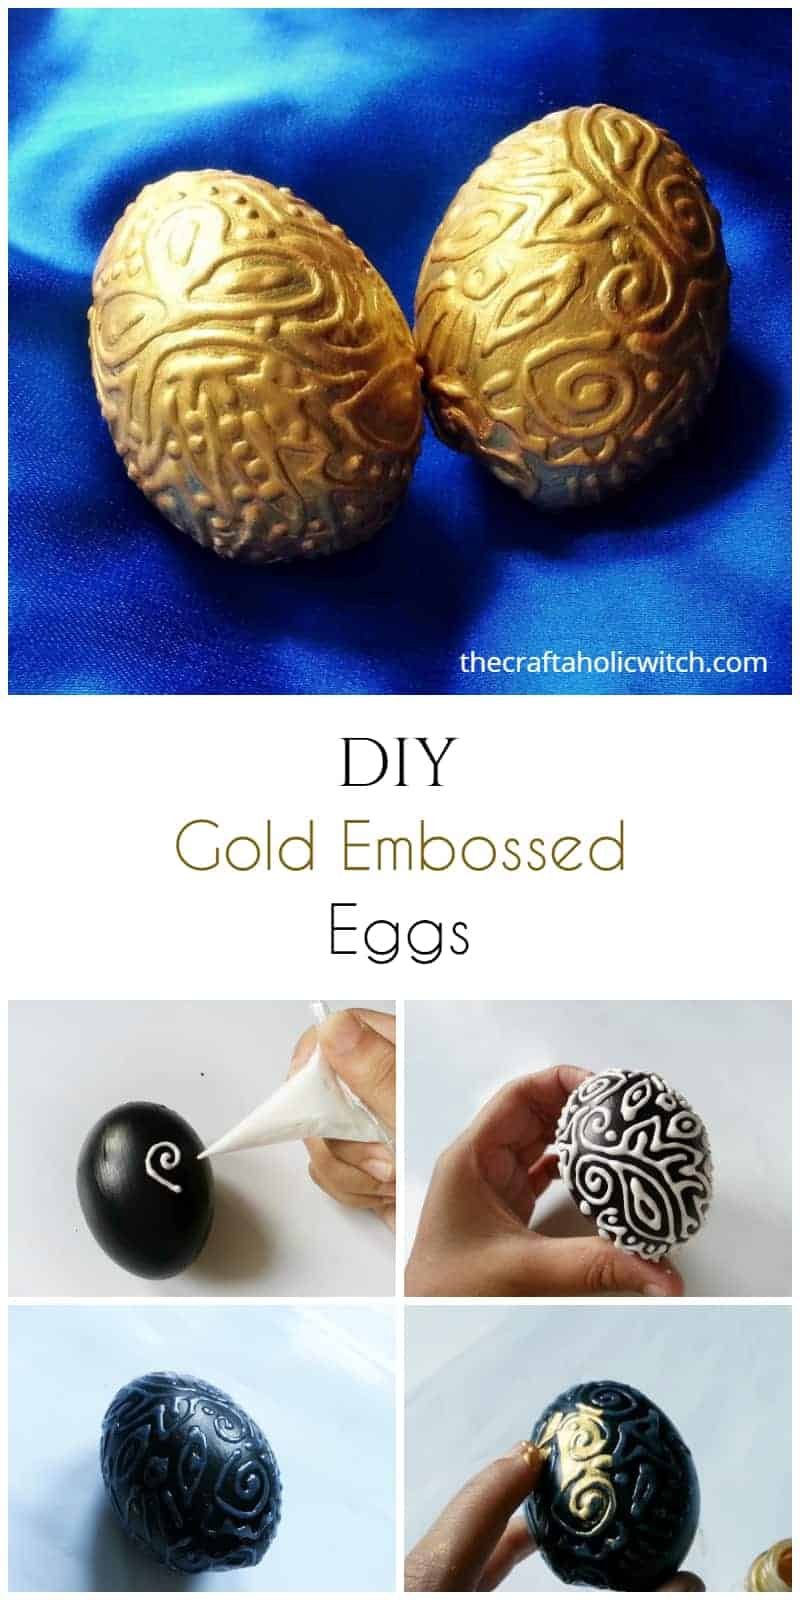 embossed eggs pin image - Create Gold Embossed Eggs